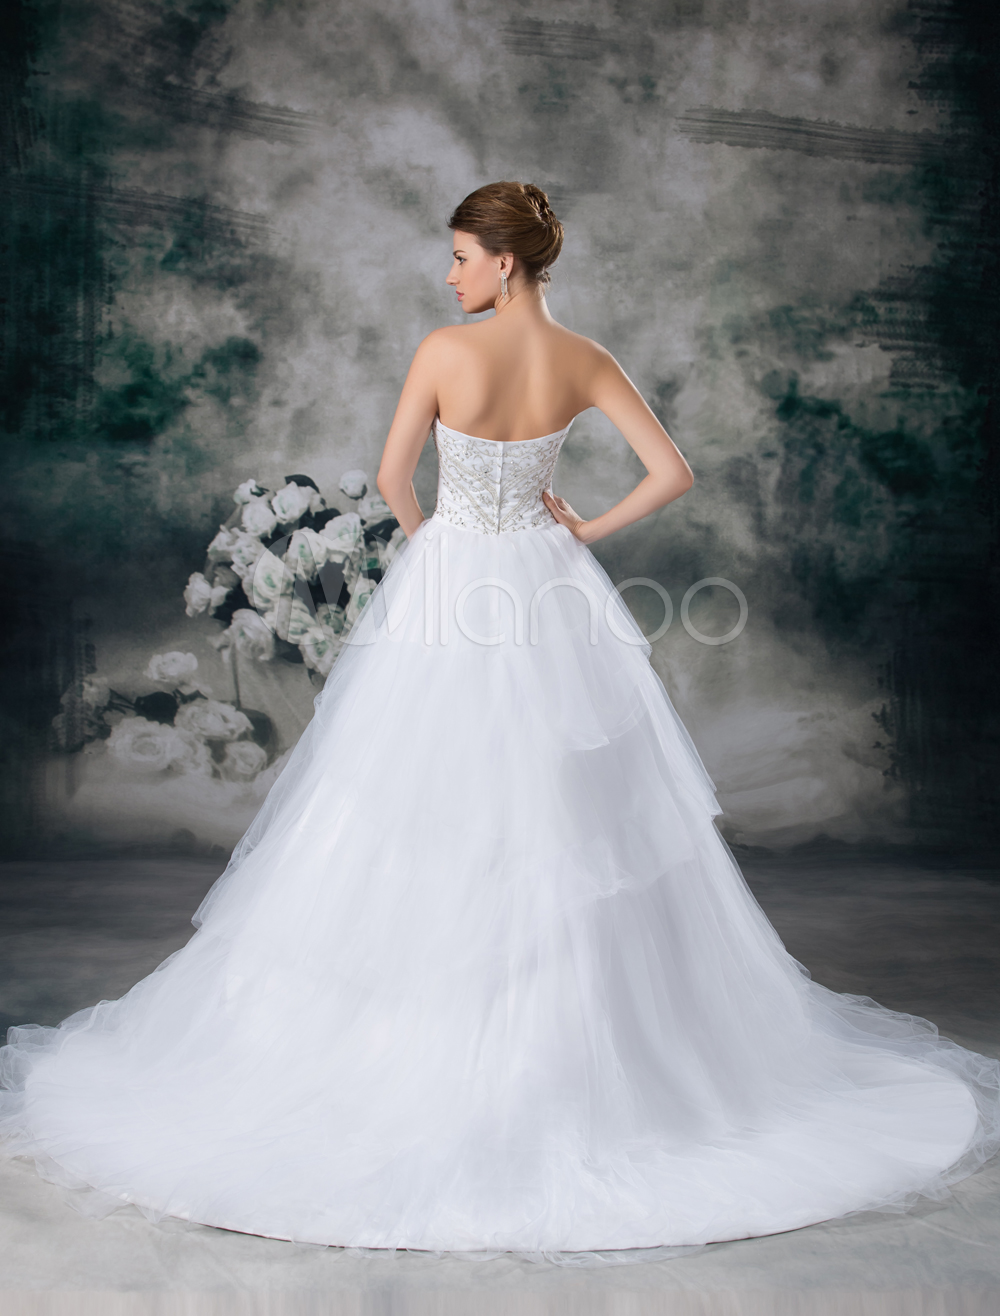 Classical White Strapless Beading Tulle Wedding Dress For Bride ...